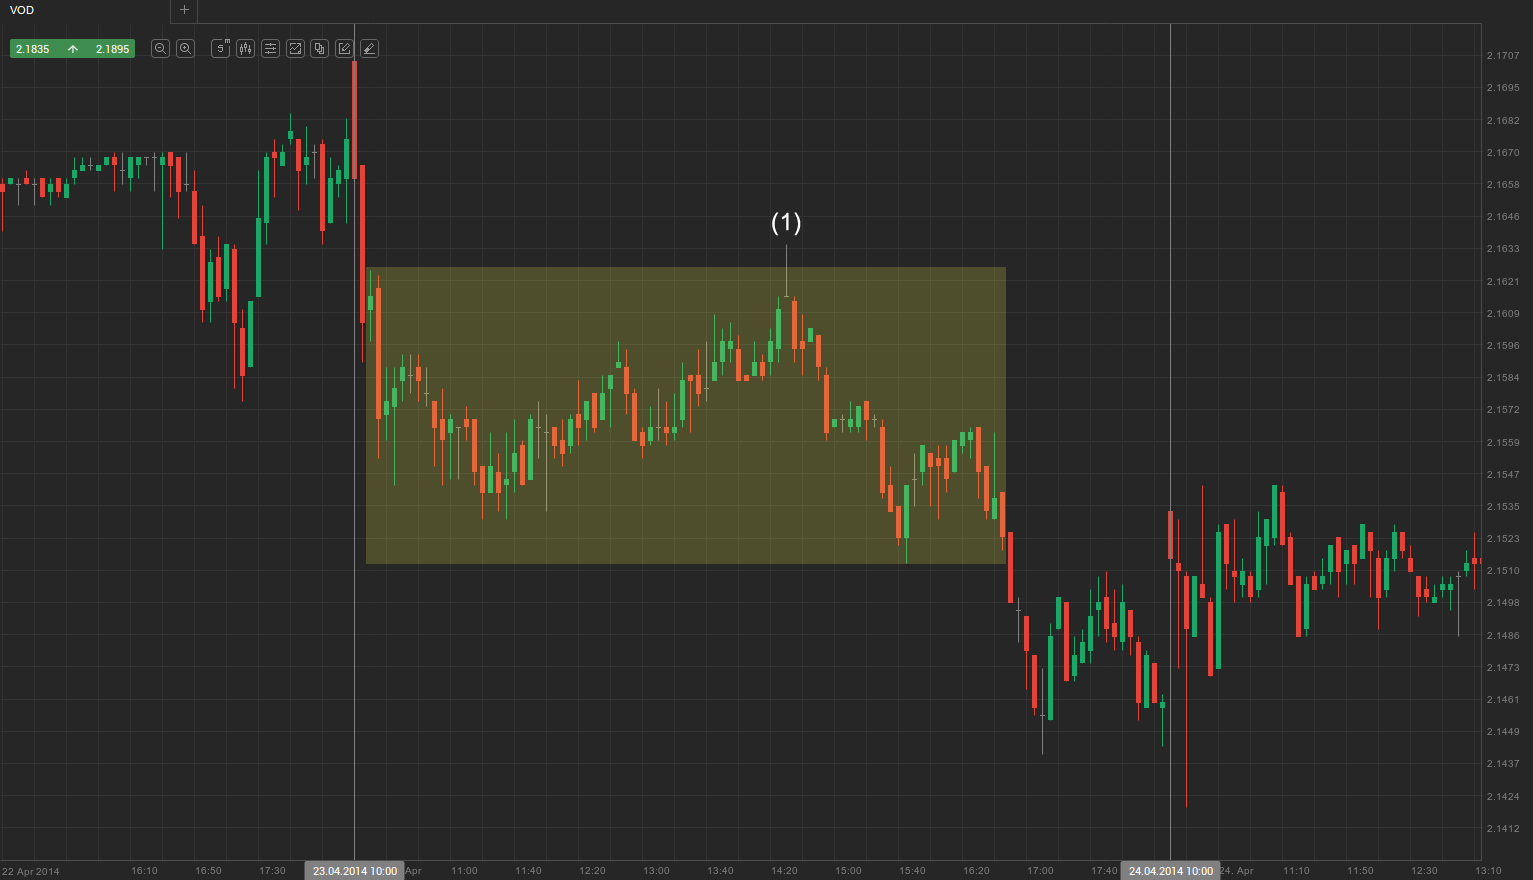 2. Late breakout + trading range